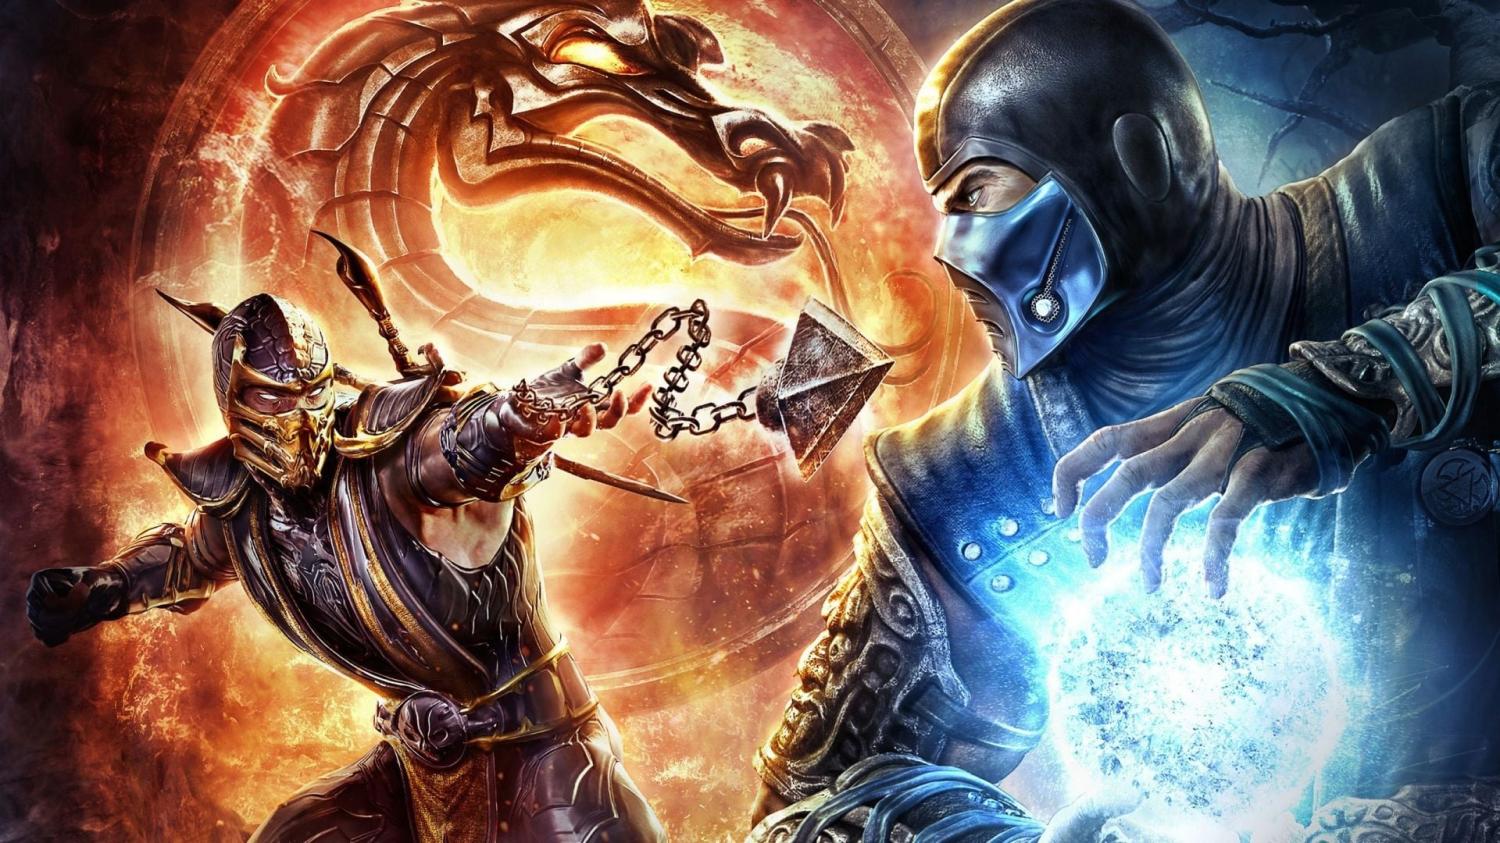 Epic: Sub-Zero vs Scorpion